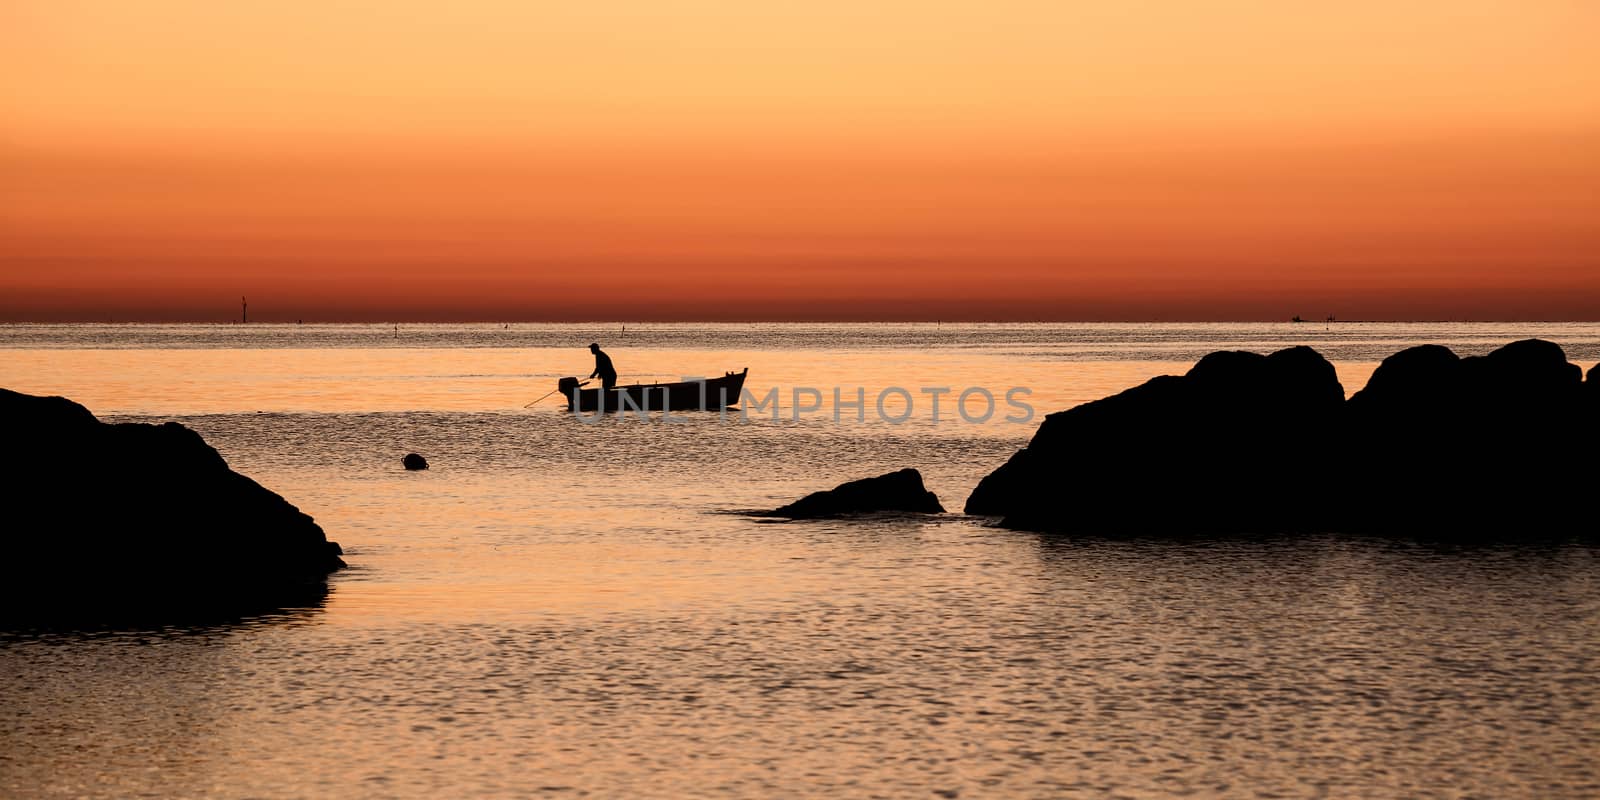 Fisherman at dawn by LuigiMorbidelli